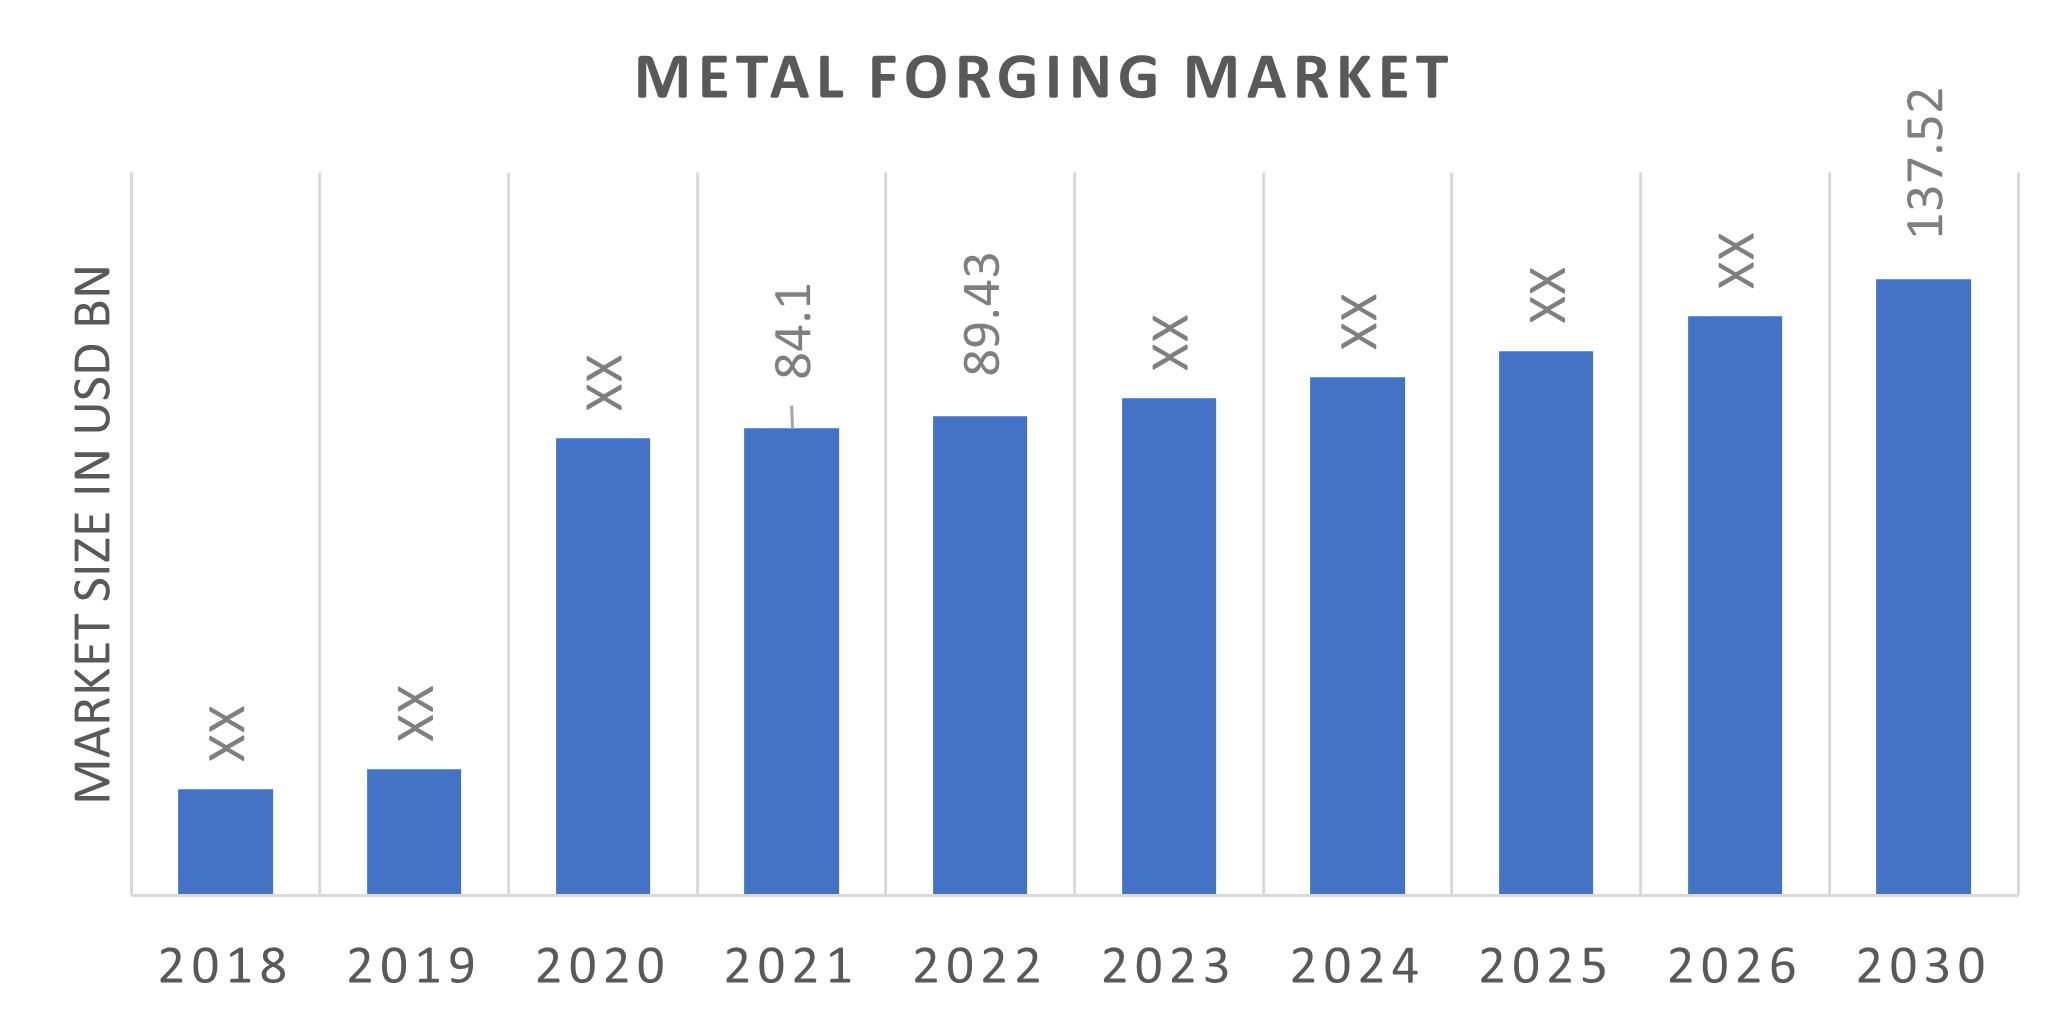 Global Metal Forging Market